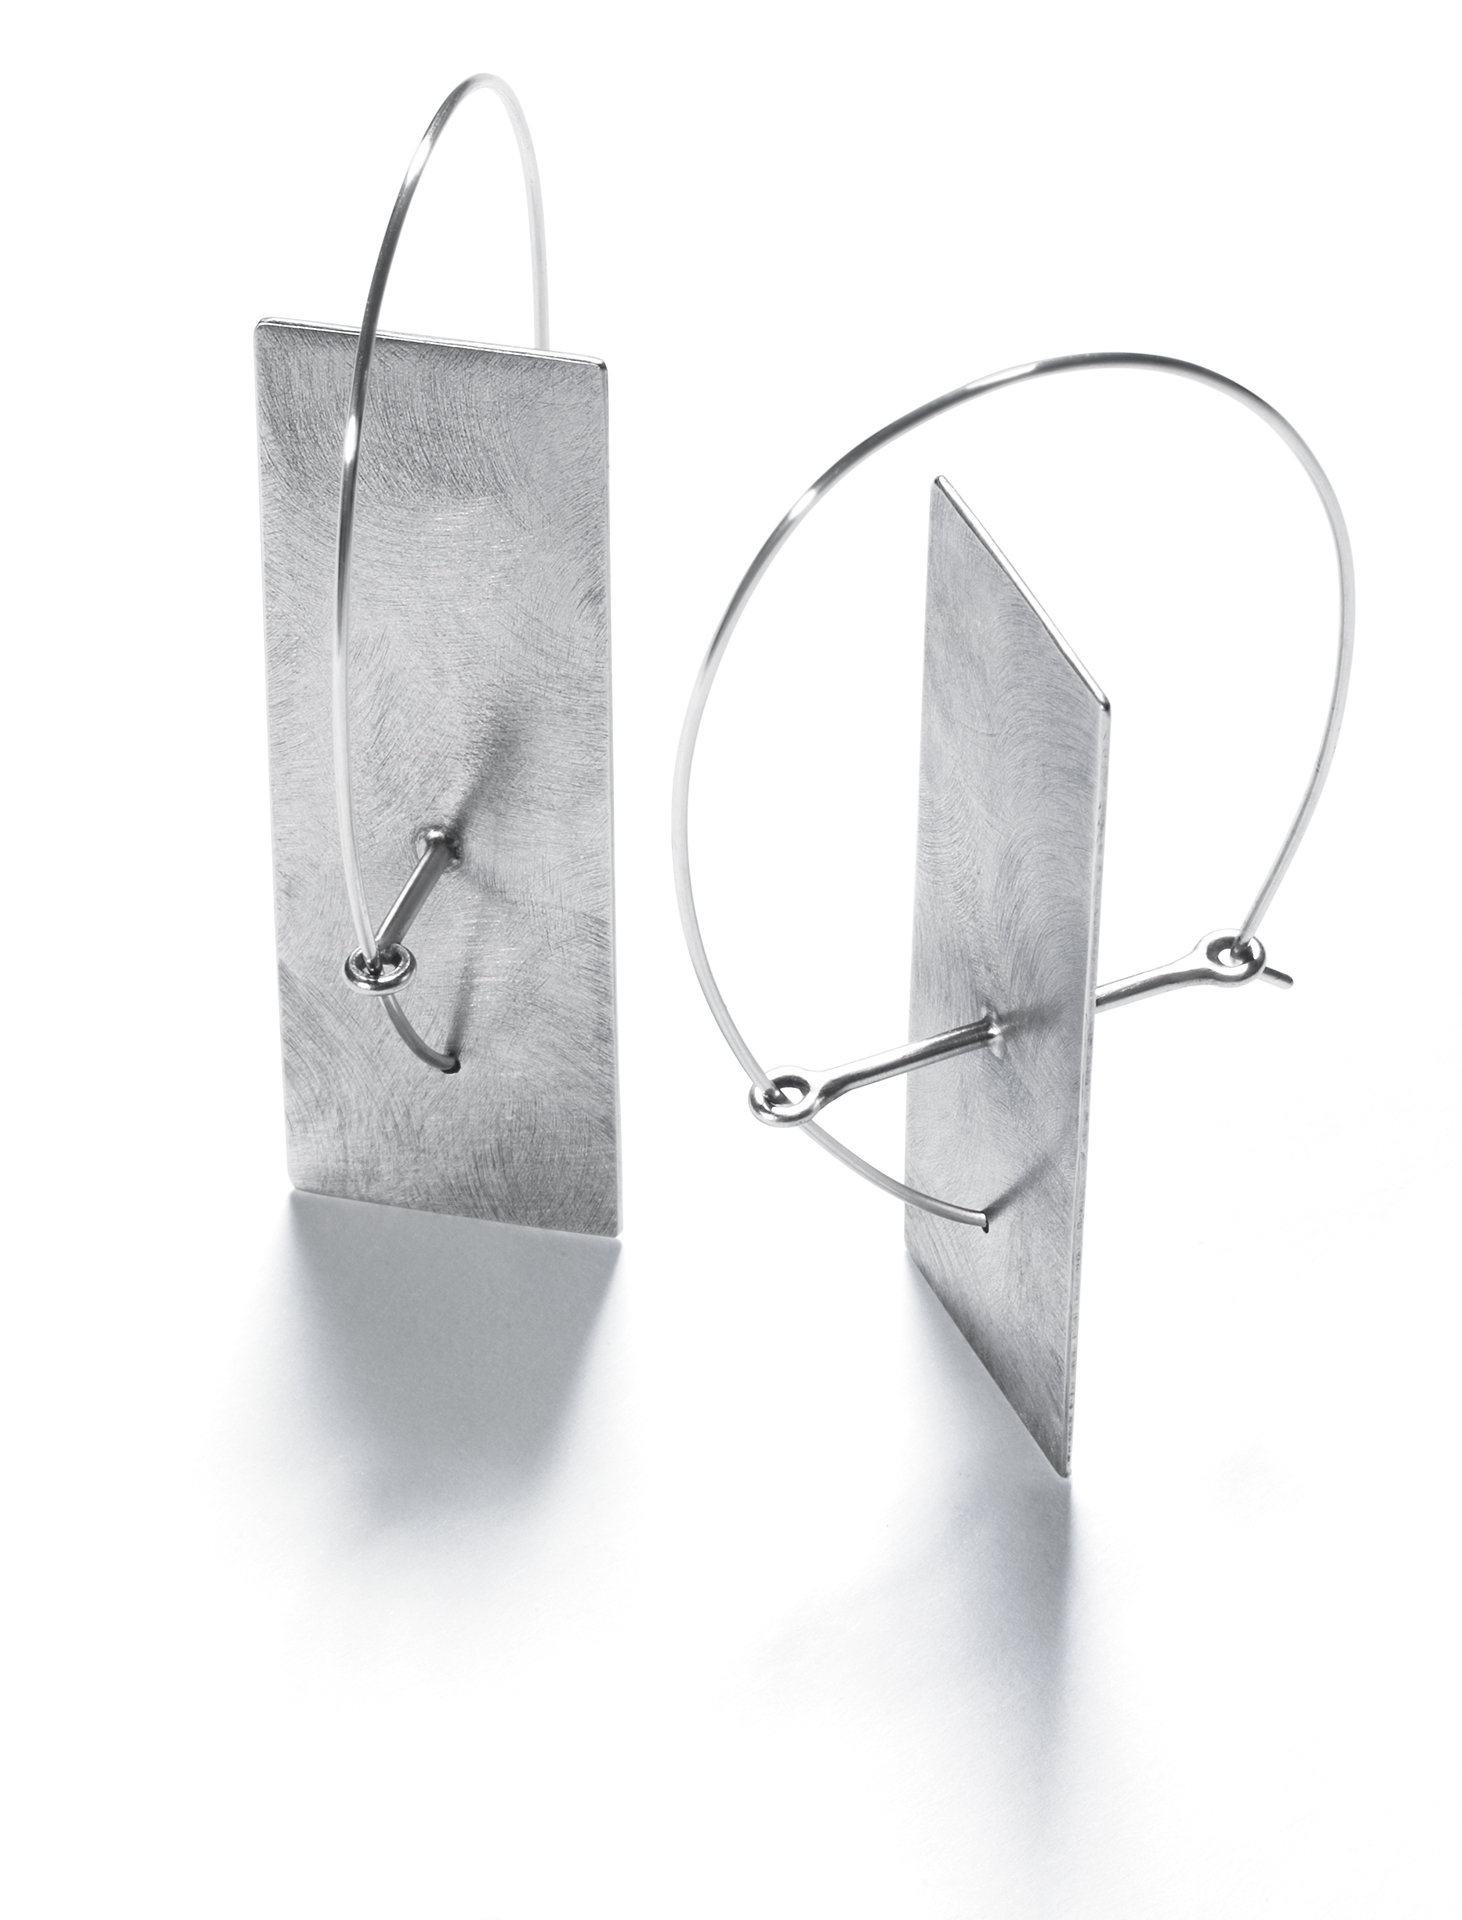 Solitary Plane Earrings by Sarah Mann (Silver Earrings) | Artful Home